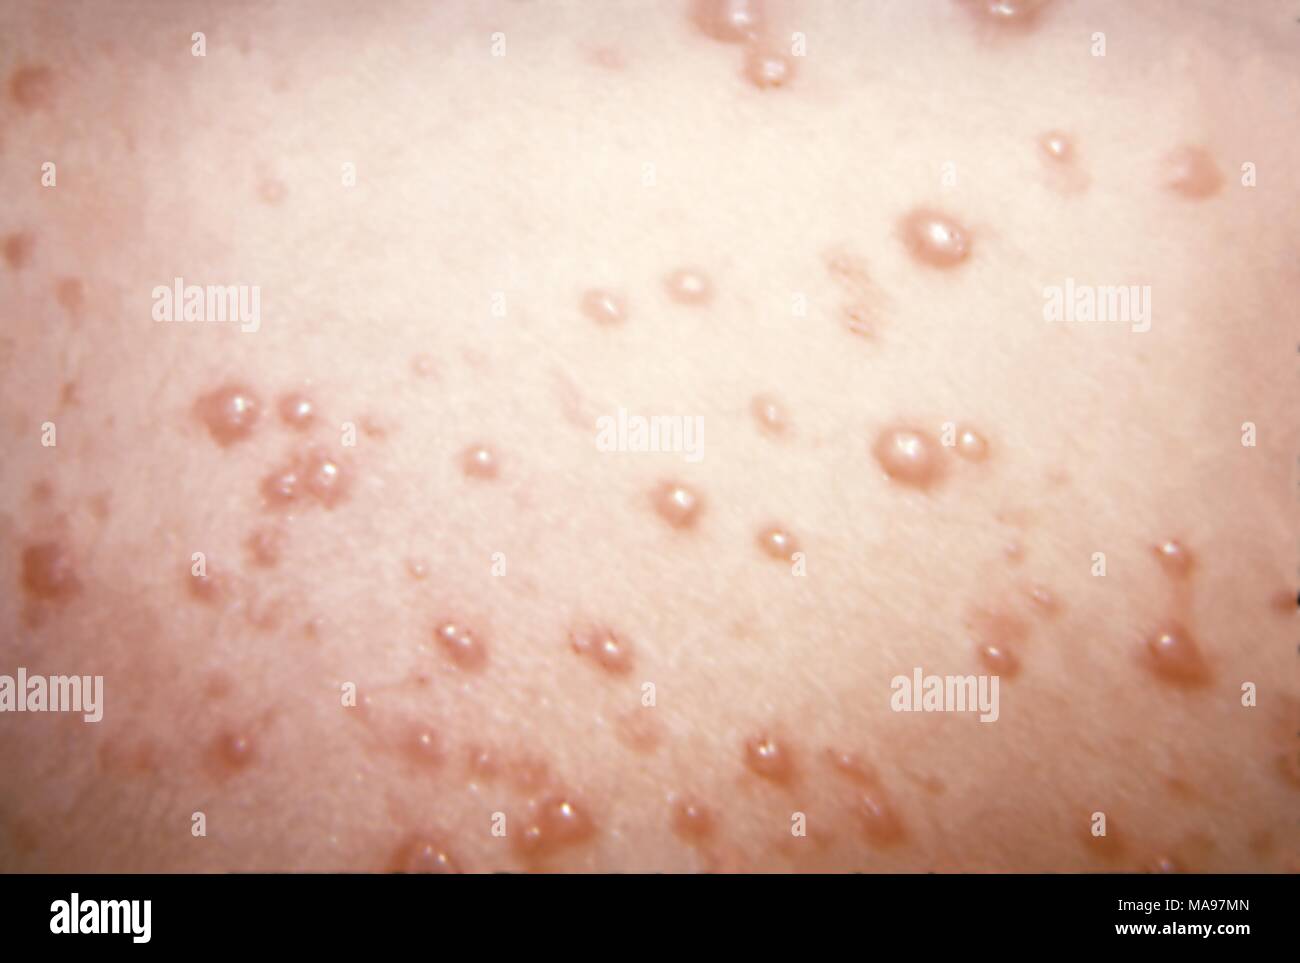 Herpesviridae chickenpox caused pustulovesicular rash on the skin due to the Varicella-zoster virus (VZV), 1975. Image courtesy Centers for Disease Control (CDC) / Joe Miller. () Stock Photo